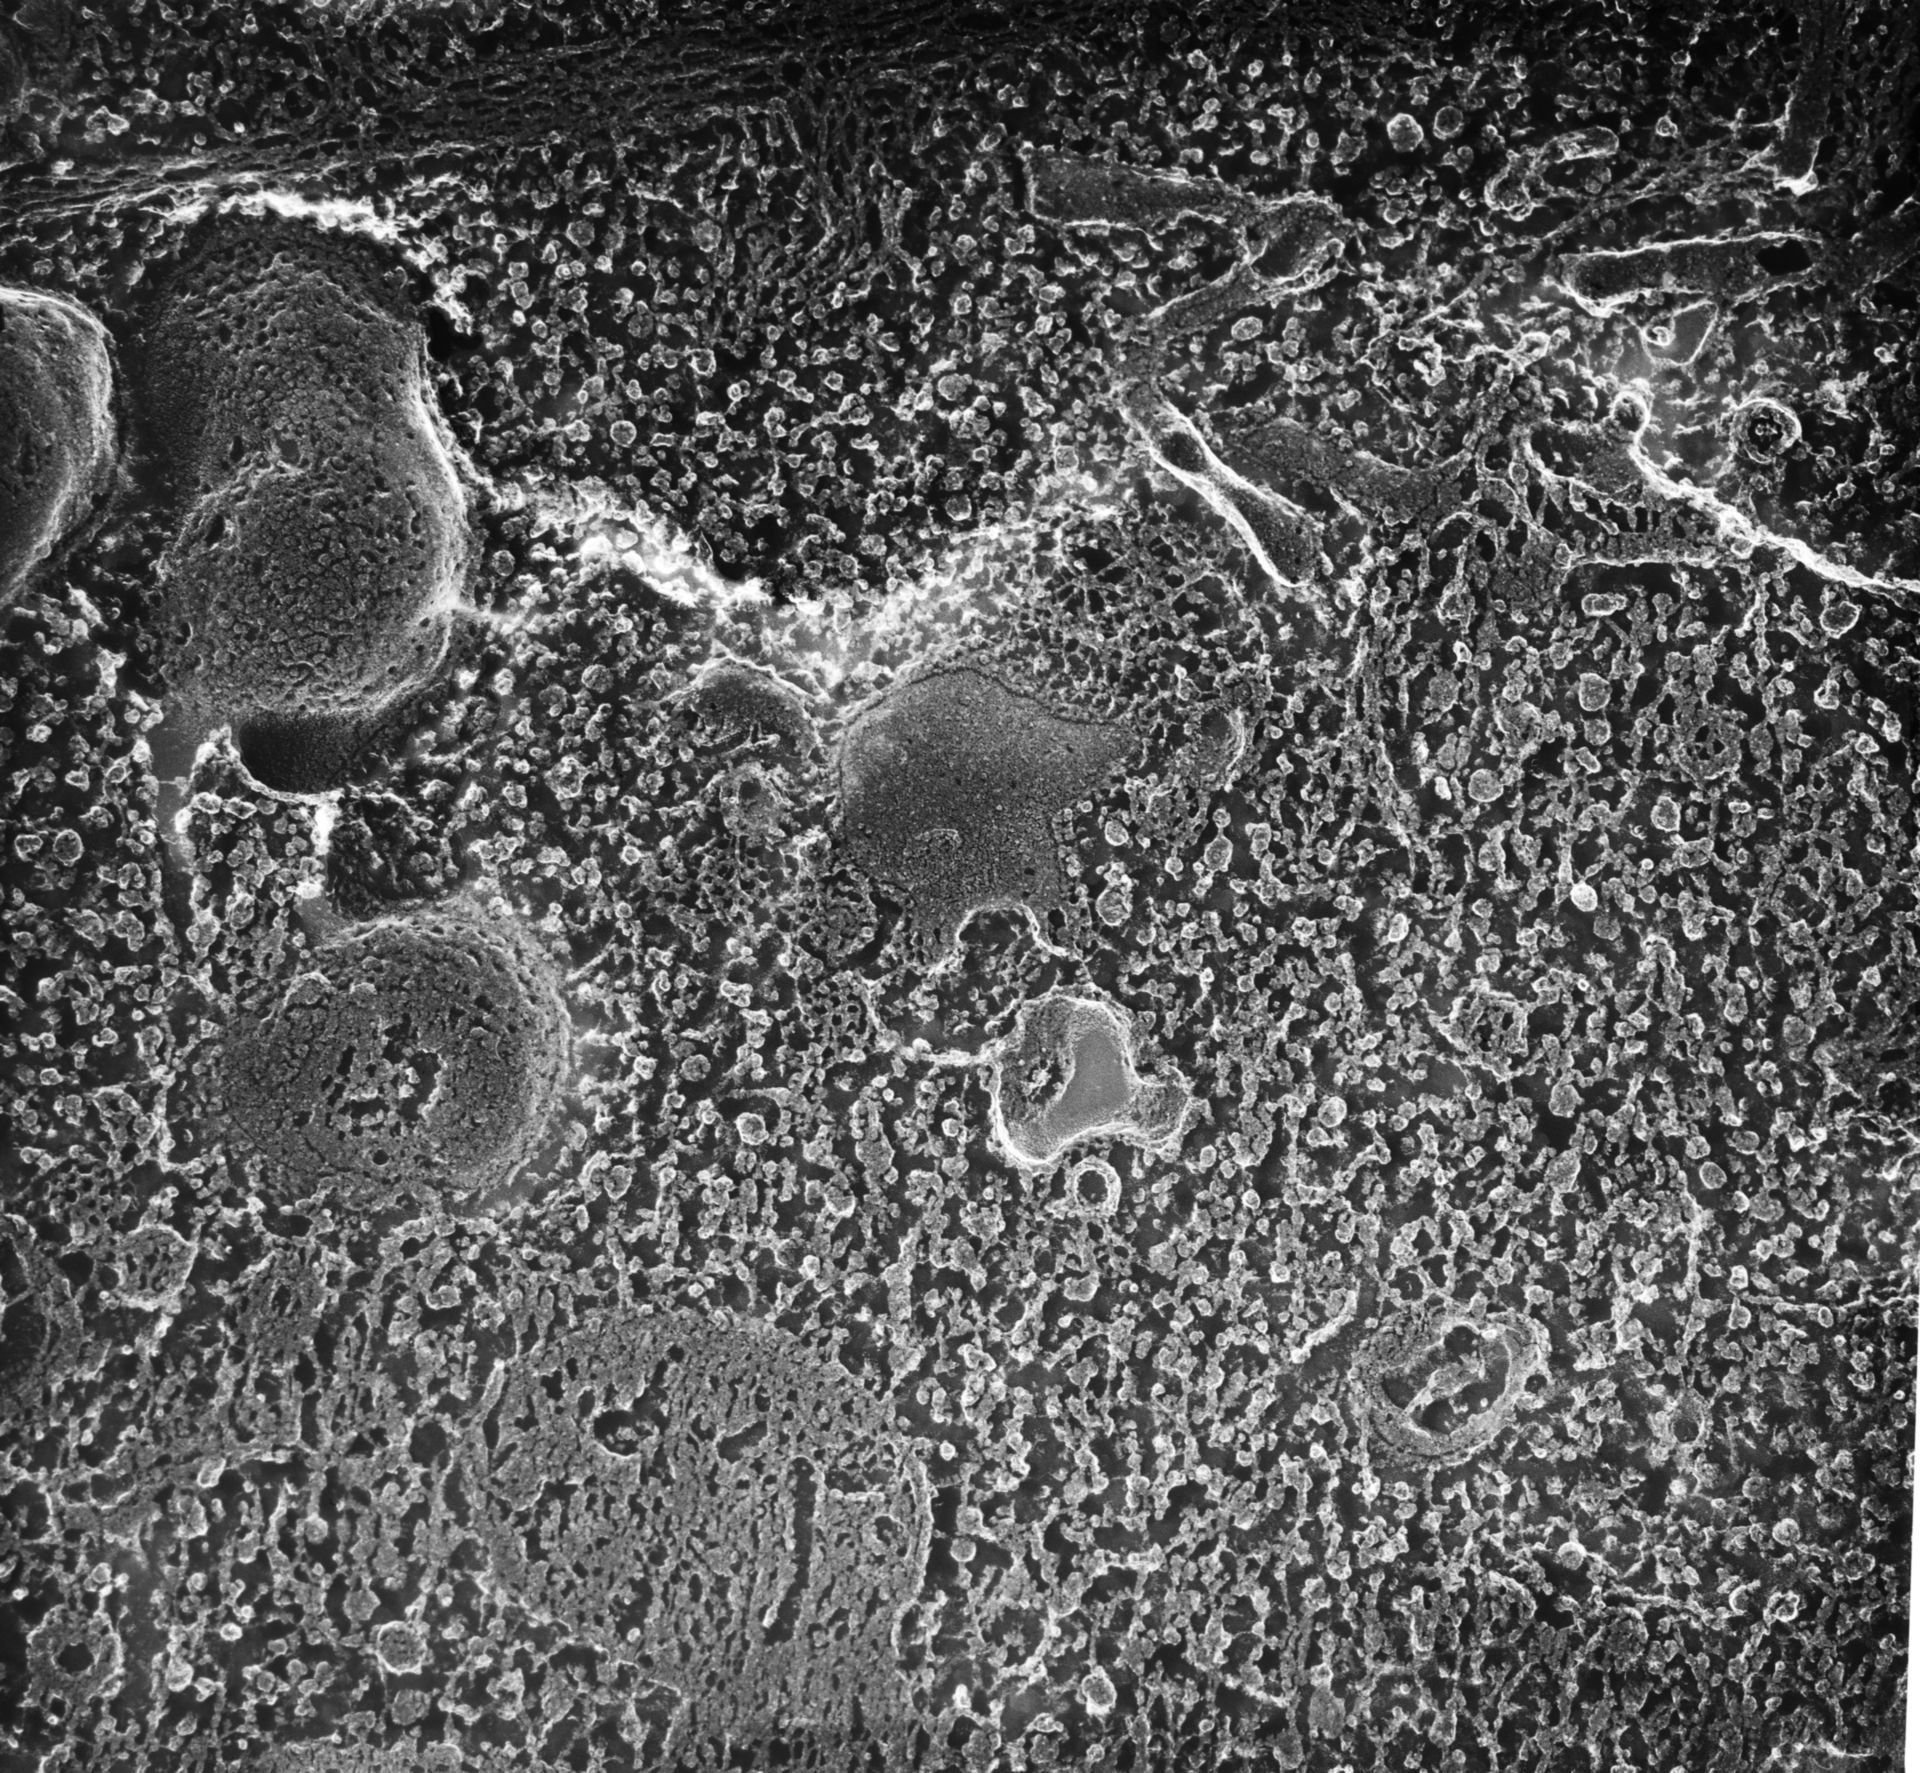 Paramecium multimicronucleatum (Microtubule basal body) - CIL:12639